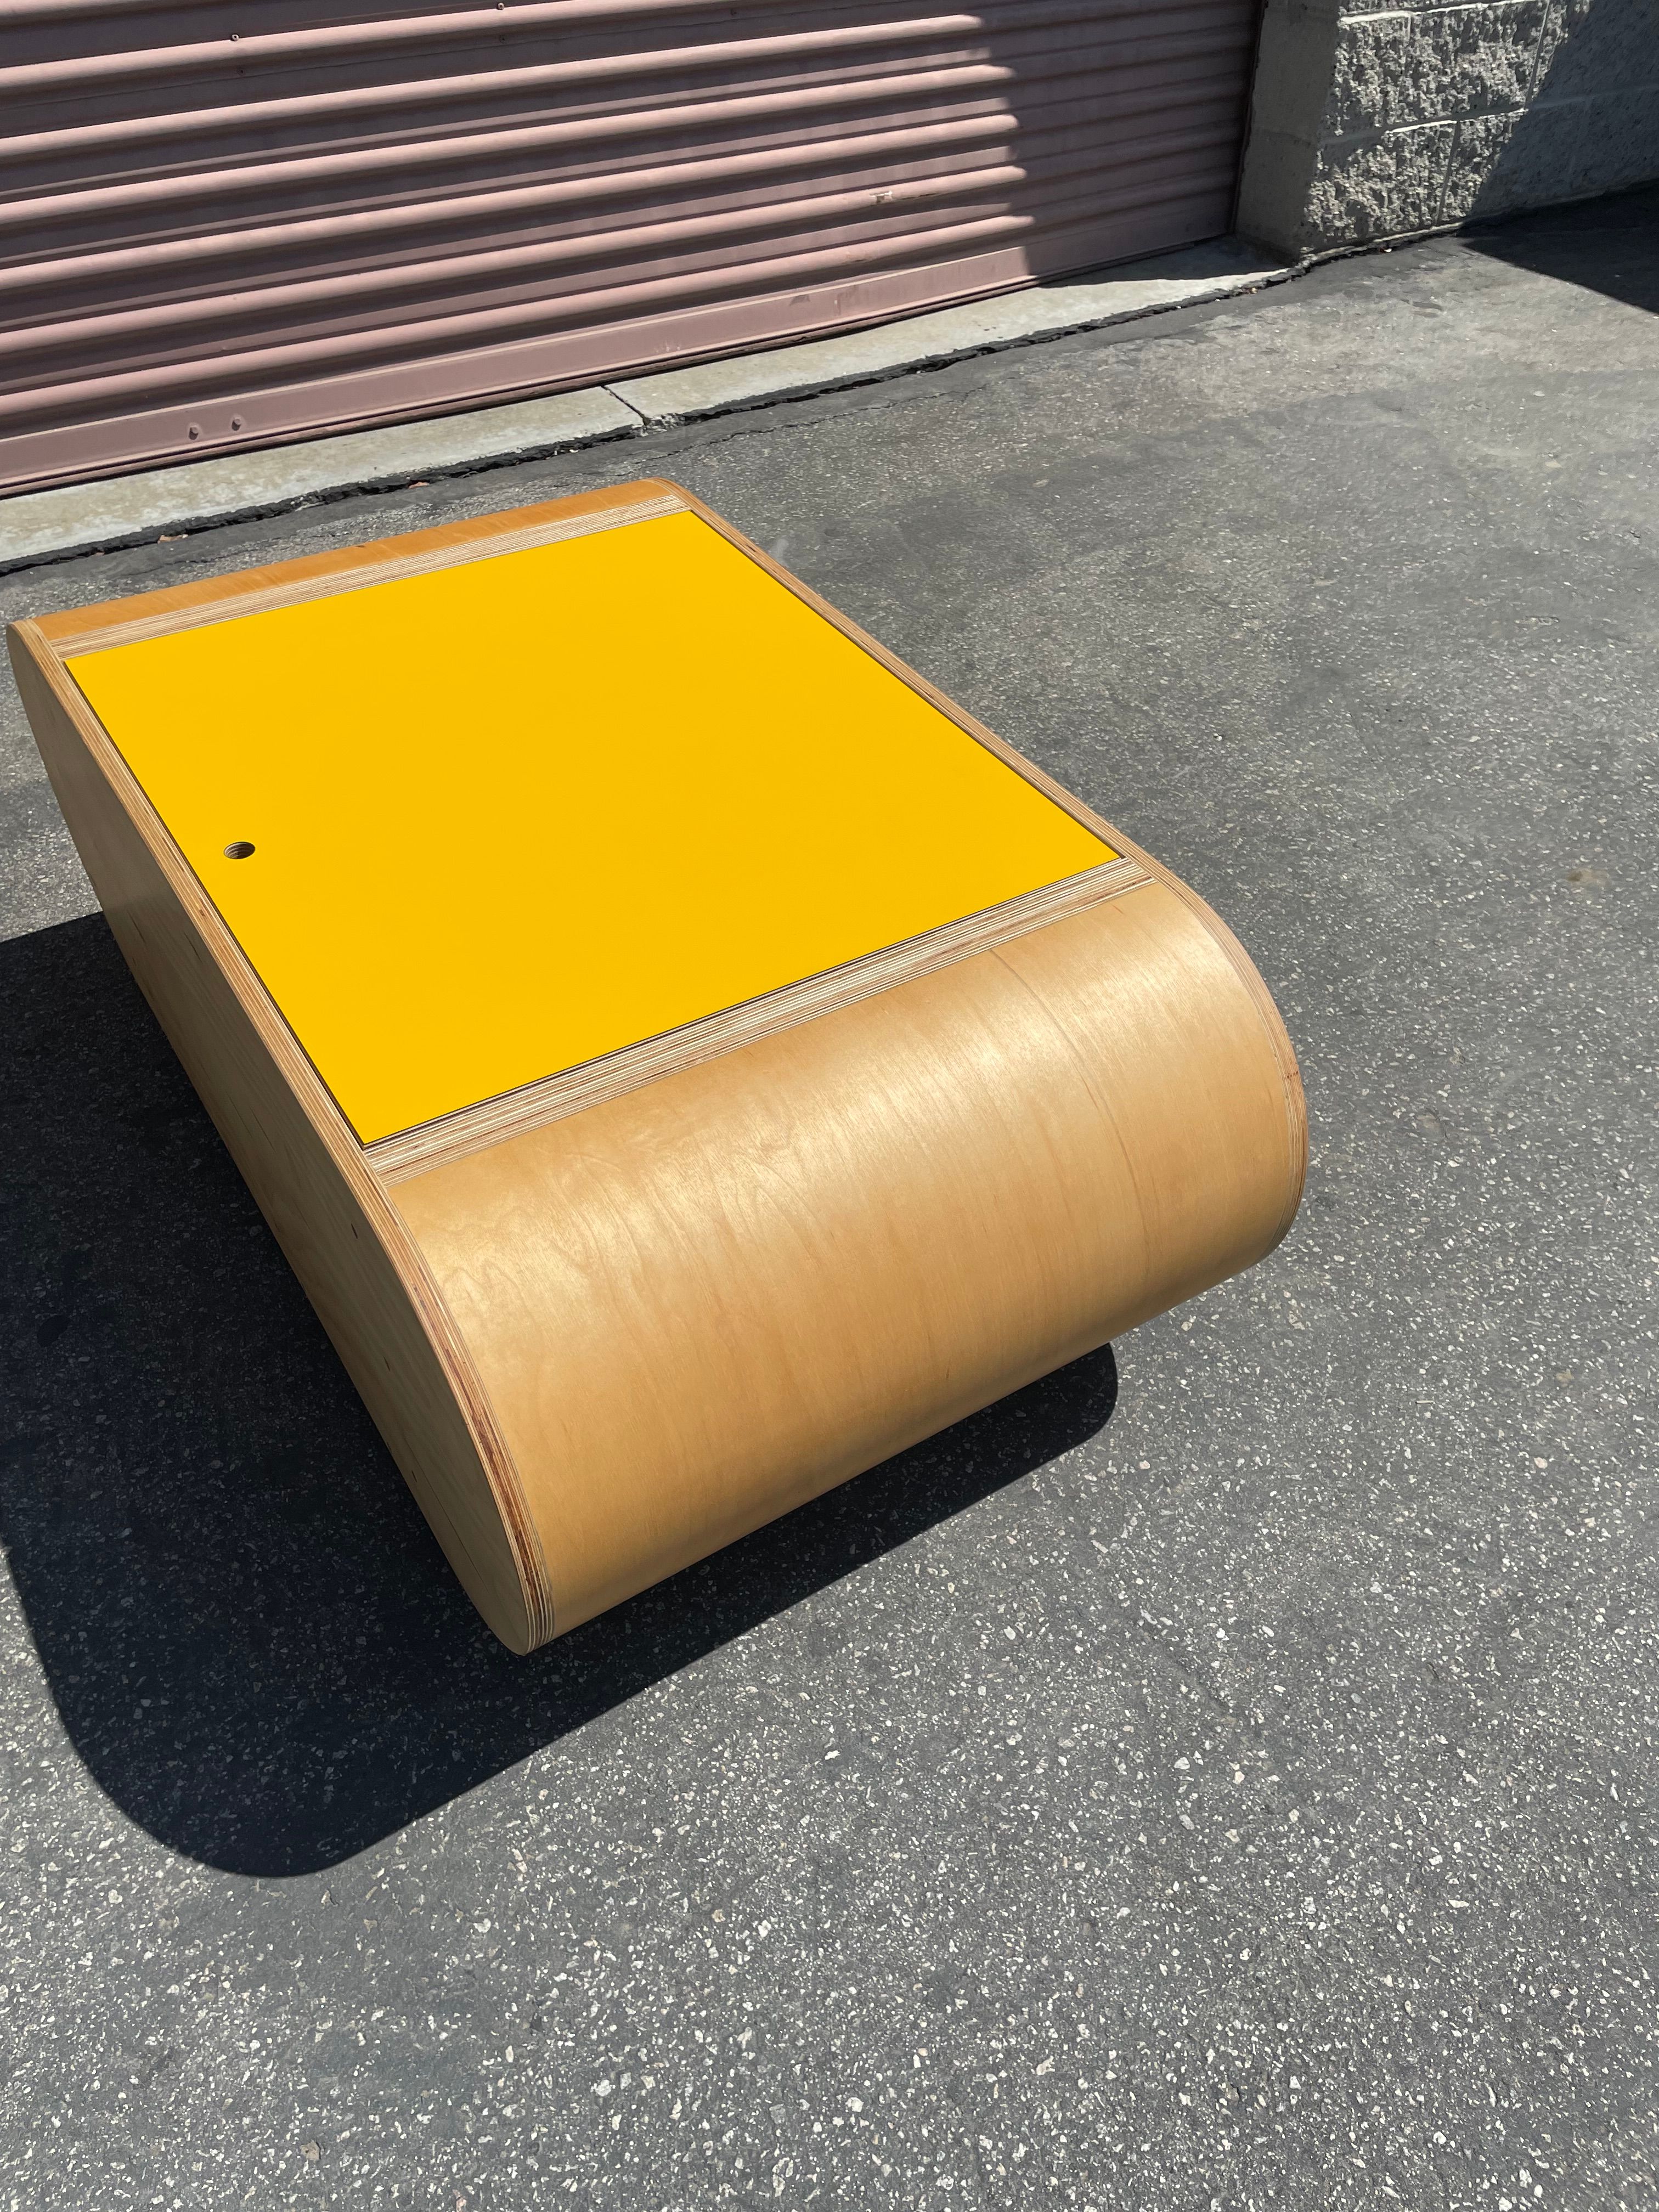  Infinity Storage Table - Yellow product image 8